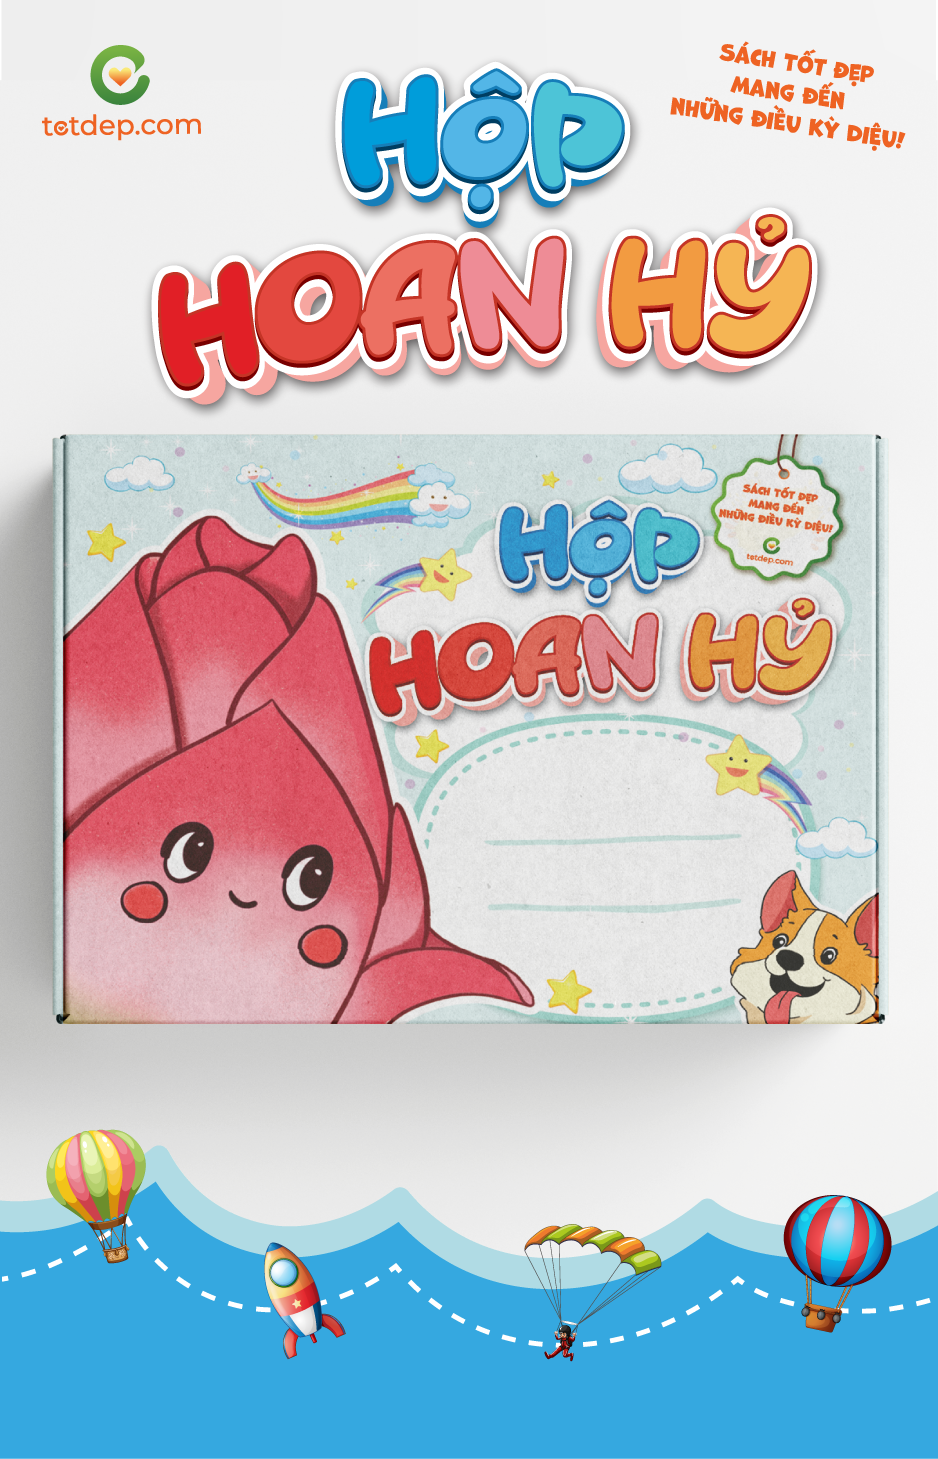 Hop hoan hy san pham web 450x700 1